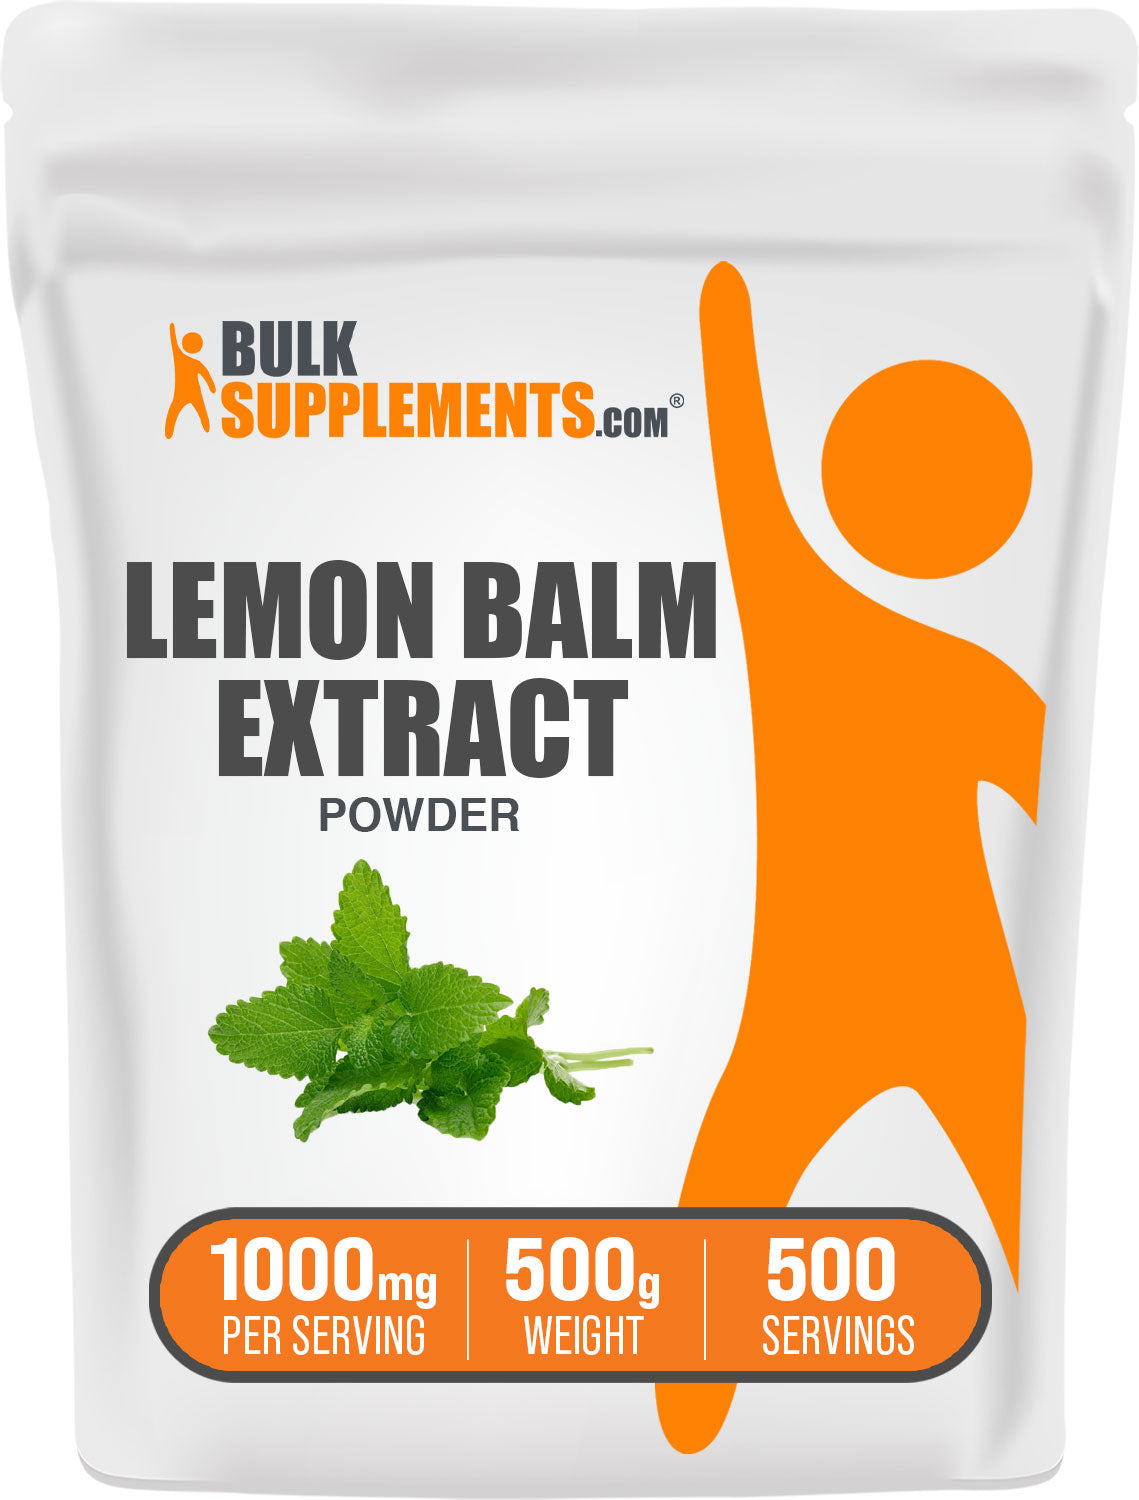 Lemon Balm Extract 500g